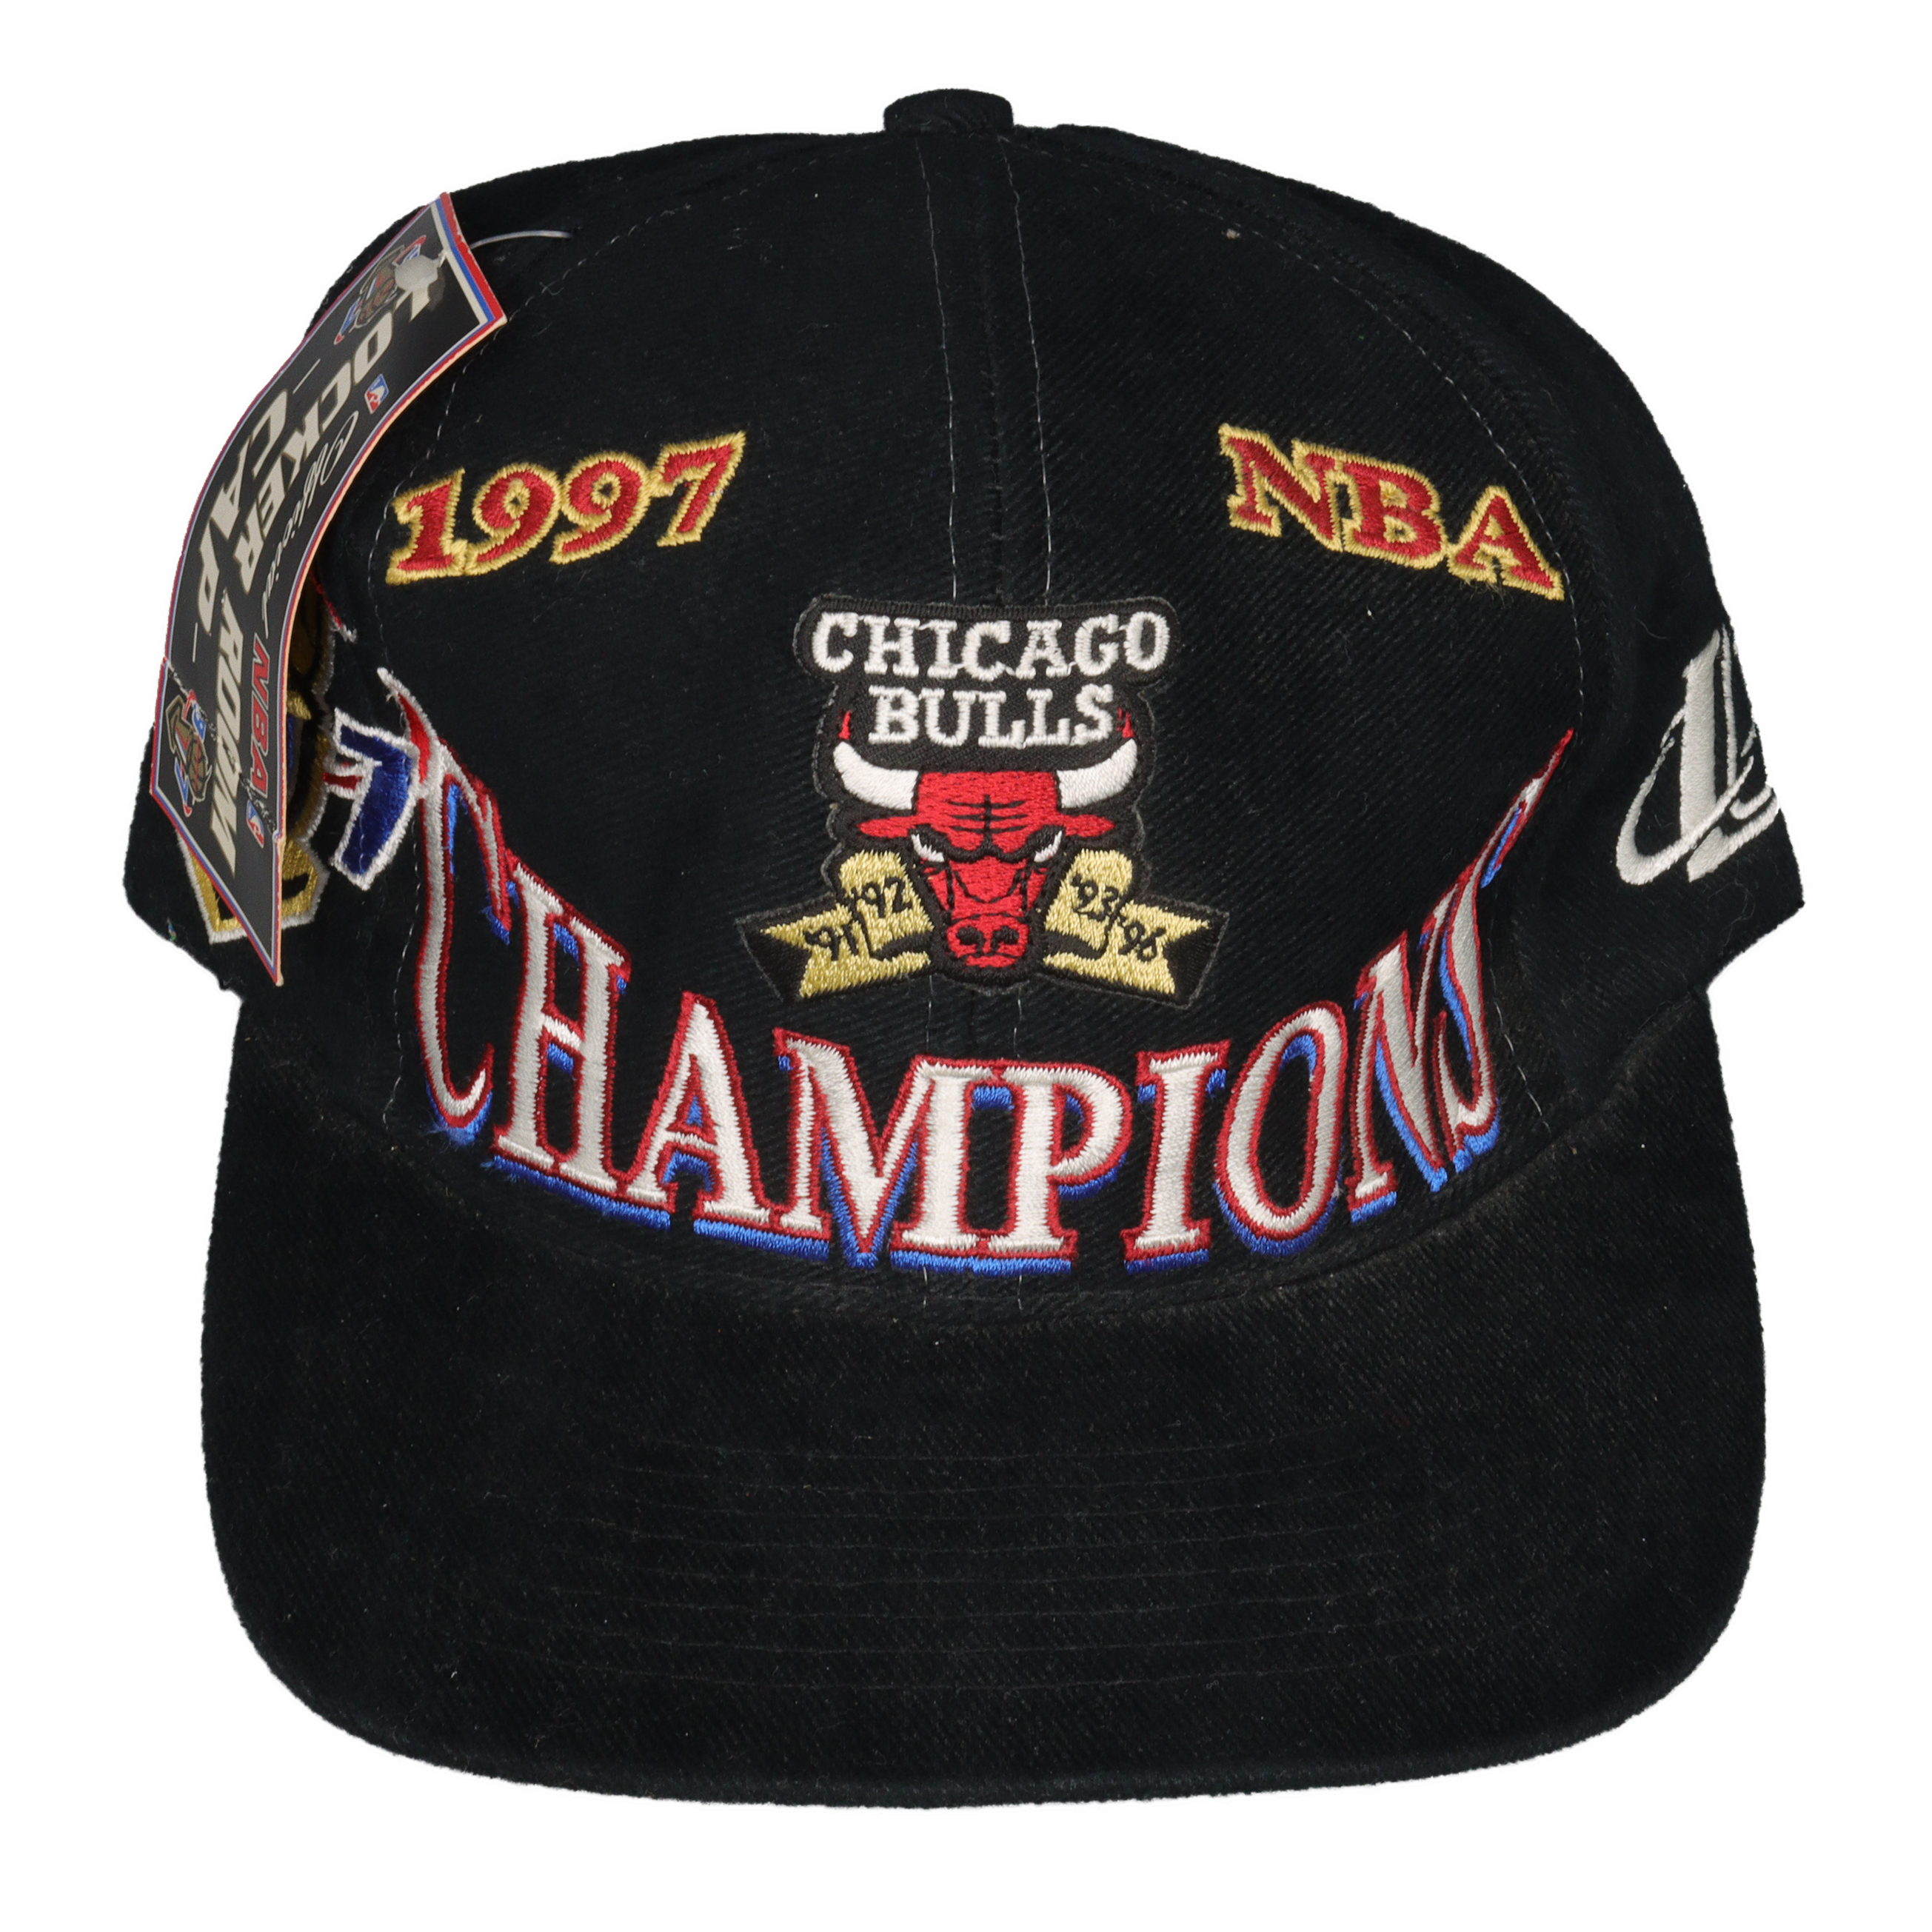 bulls championship hat